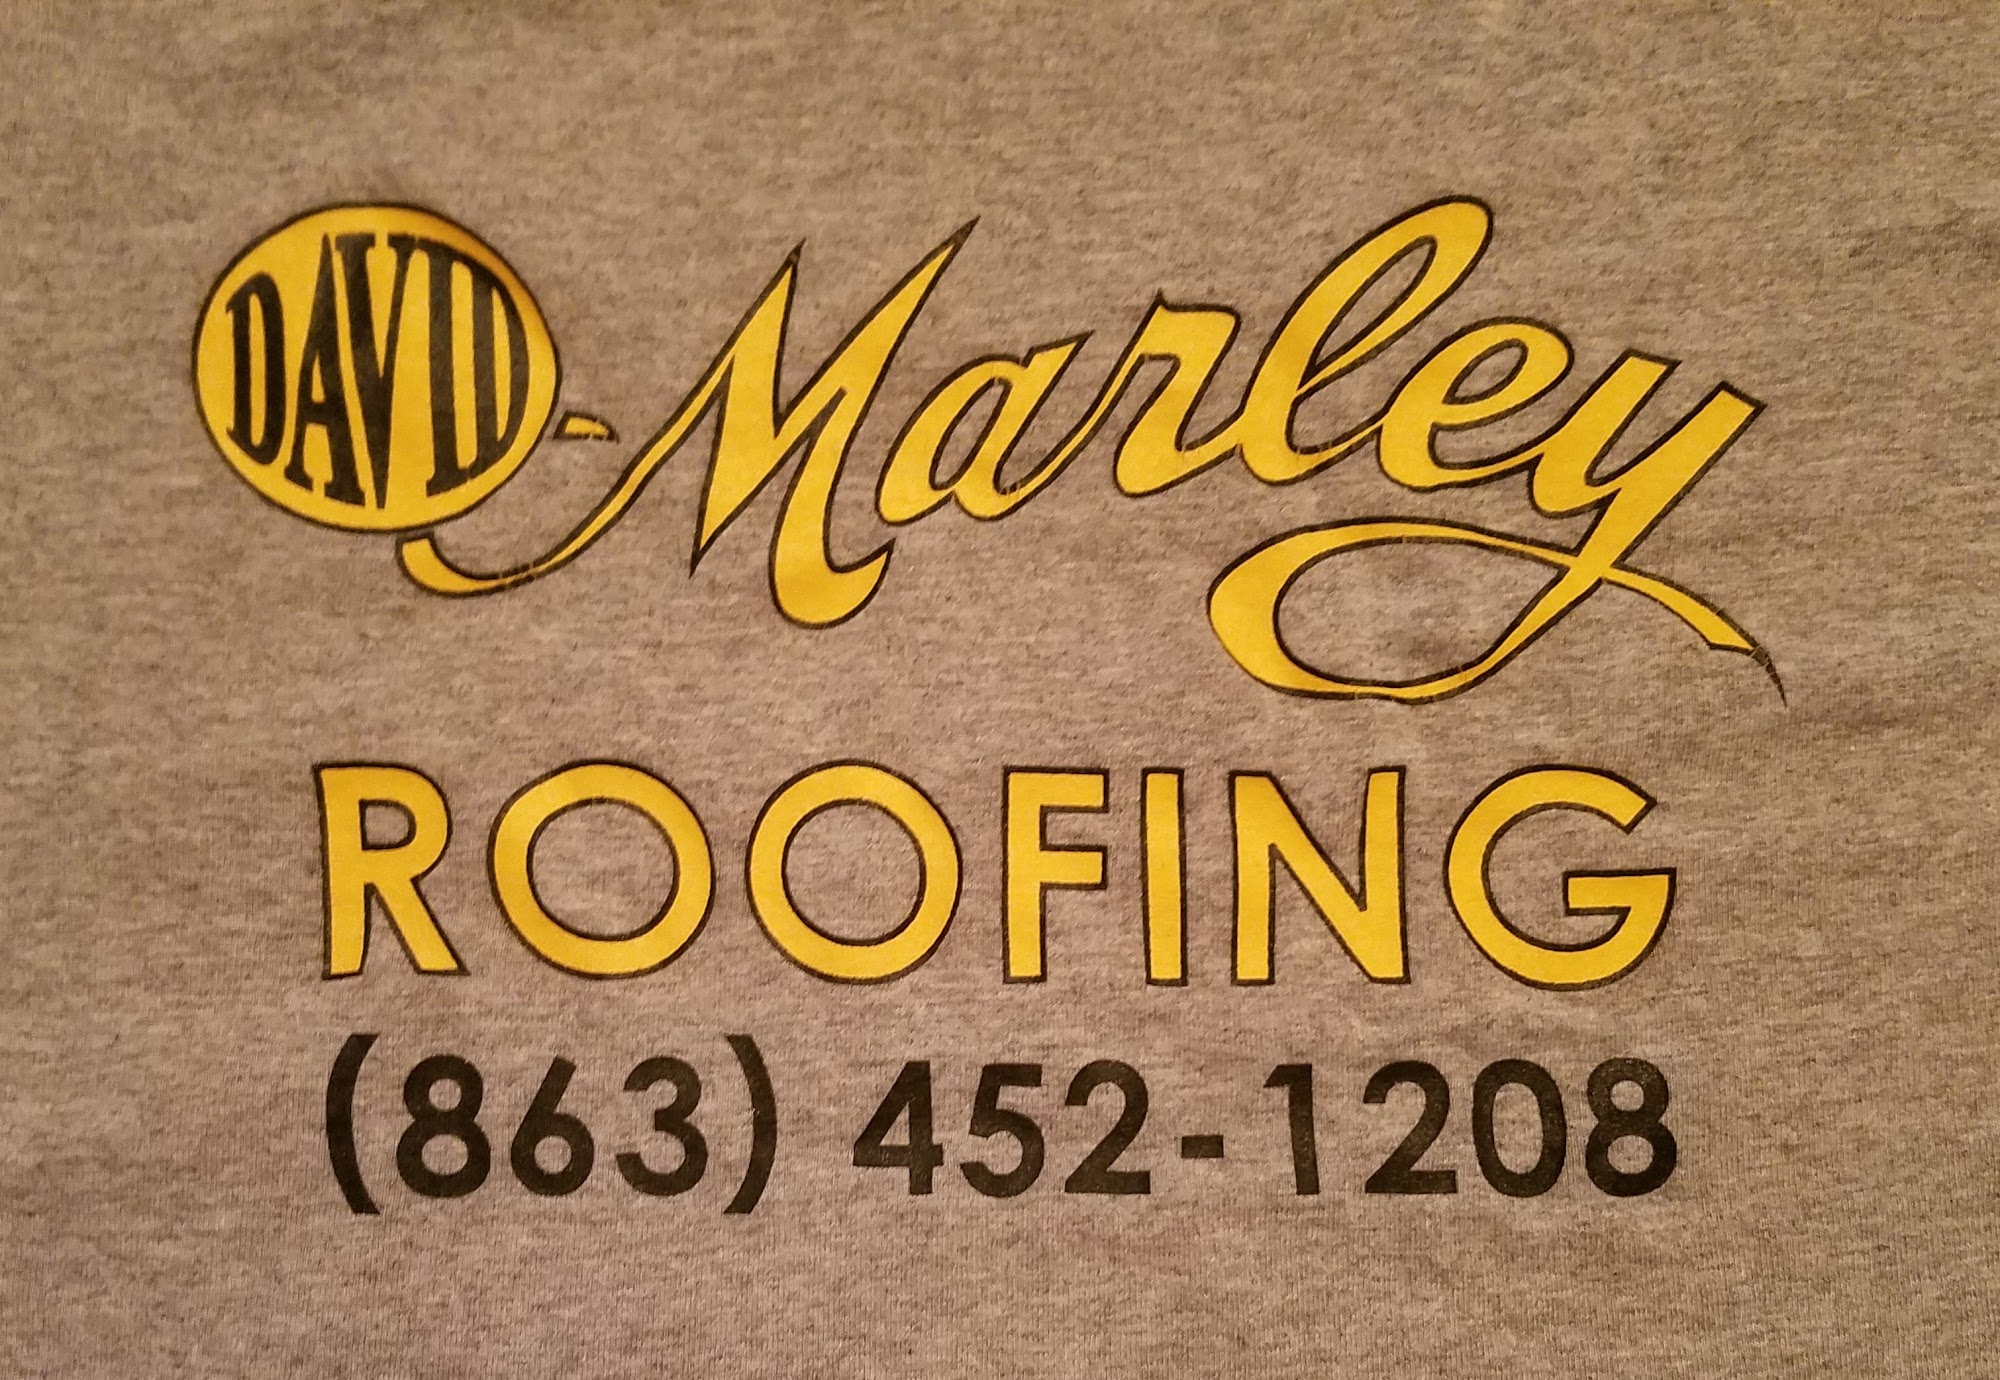 David J. Marley Roofing Contractors, Inc